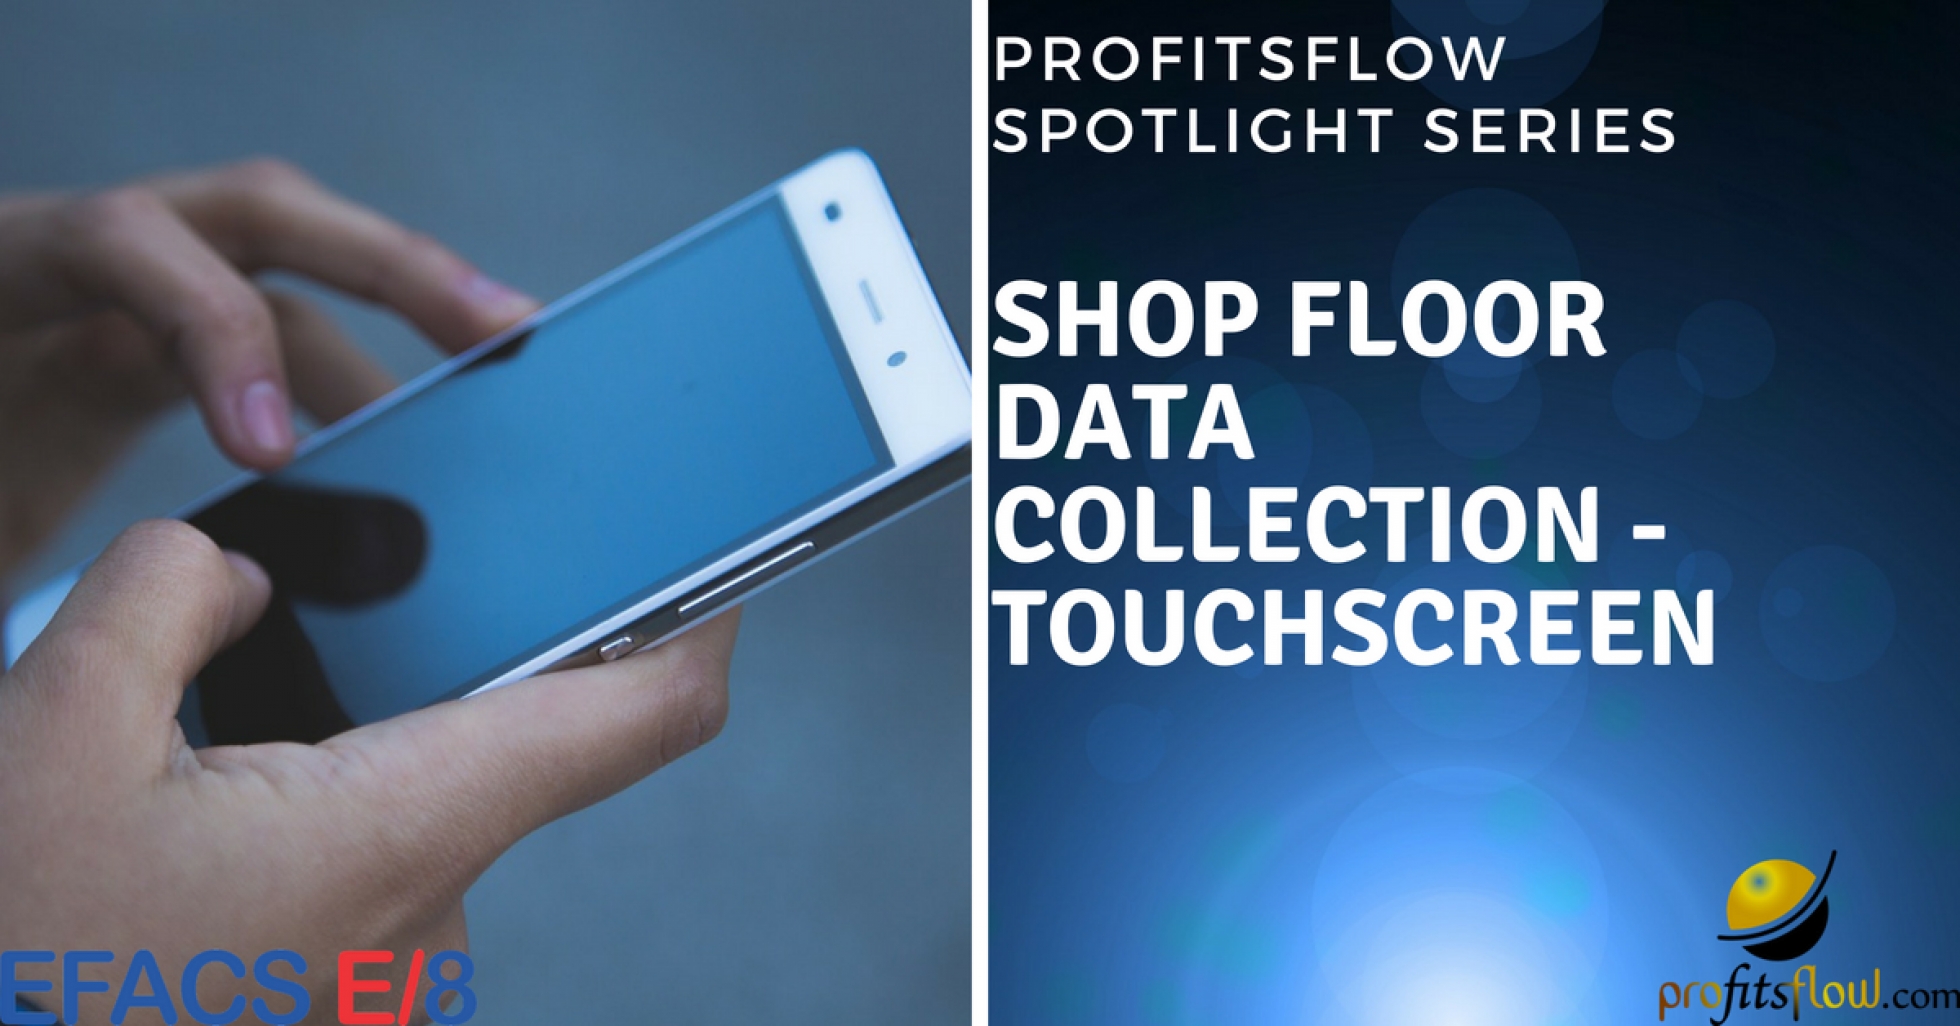 Spotlight Series: Shop Floor Data Collection